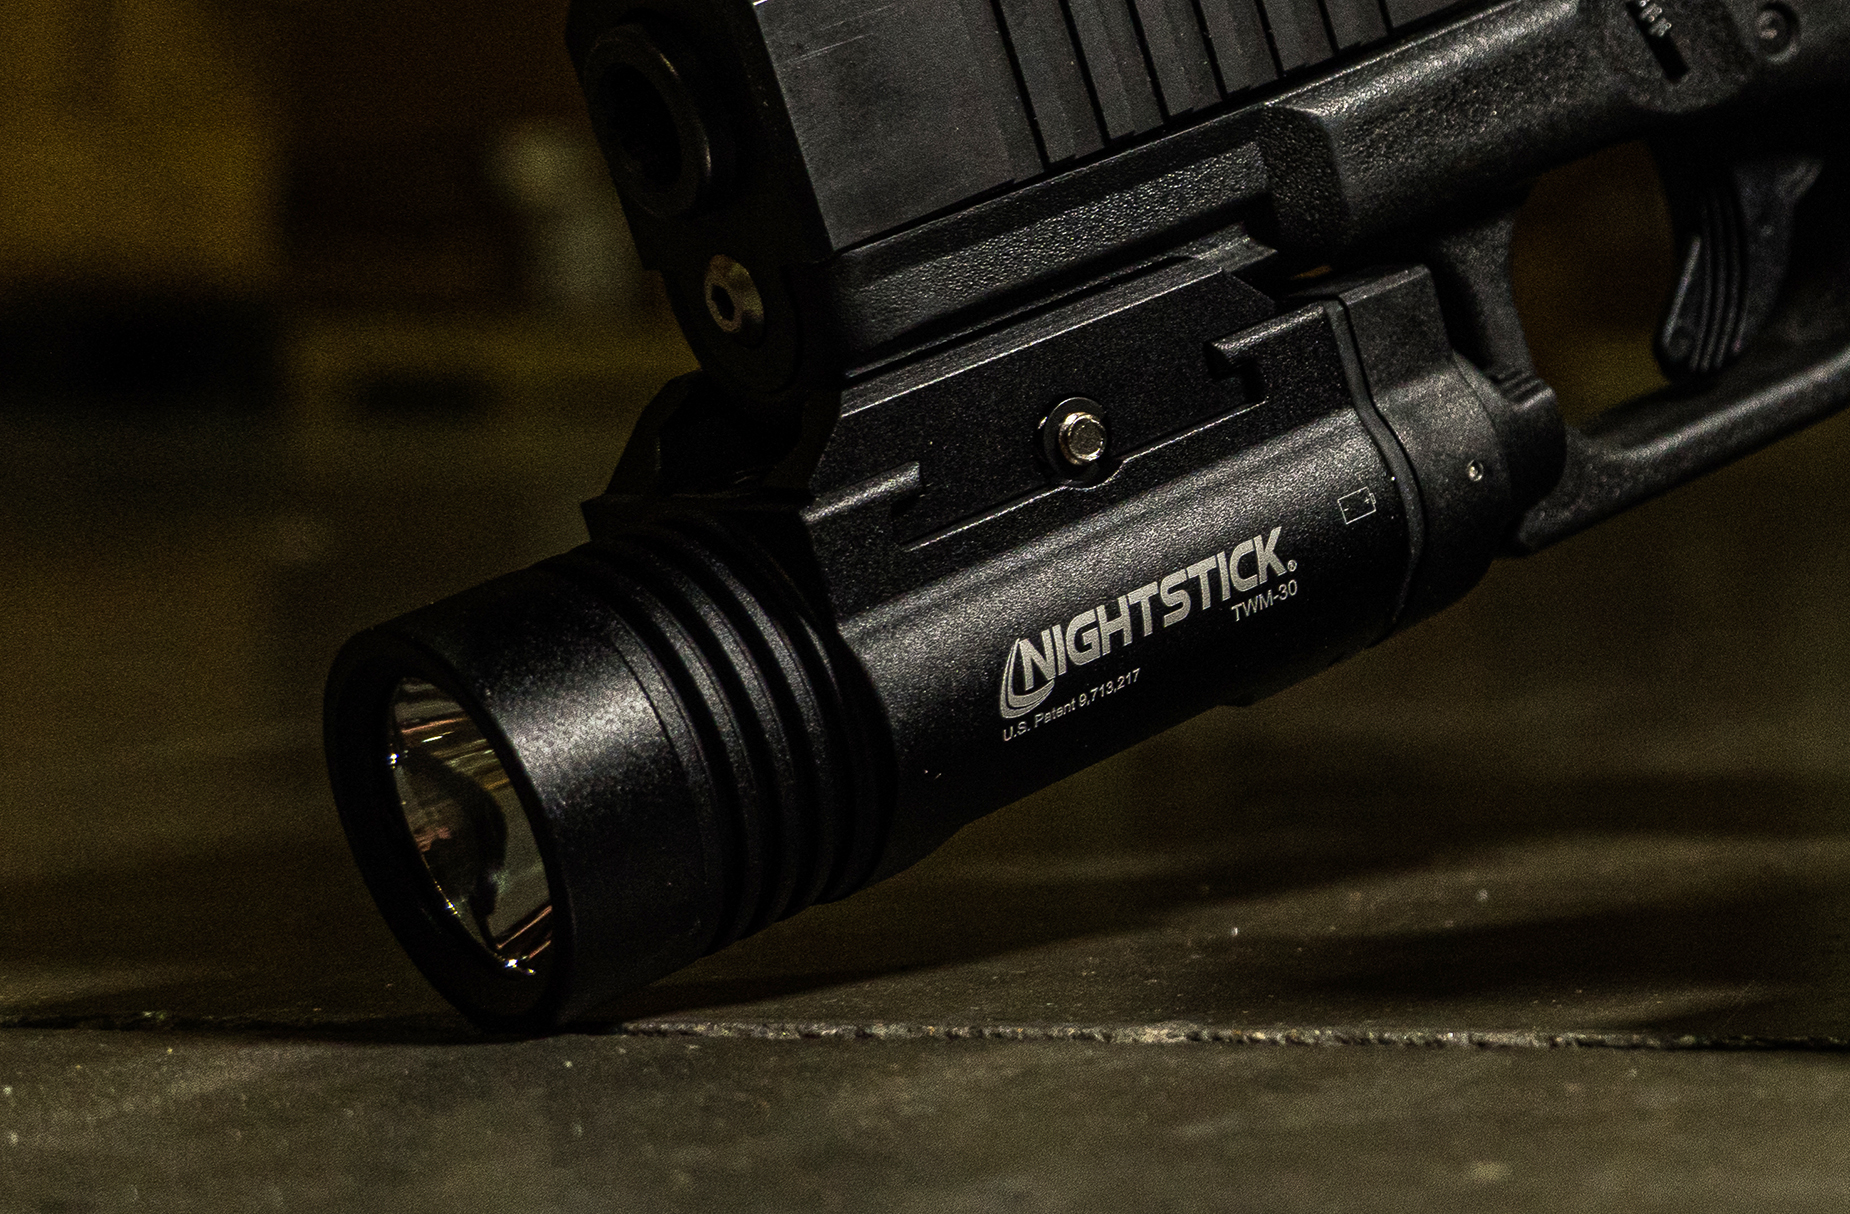 Nightstick TMW-30 pistol light in black